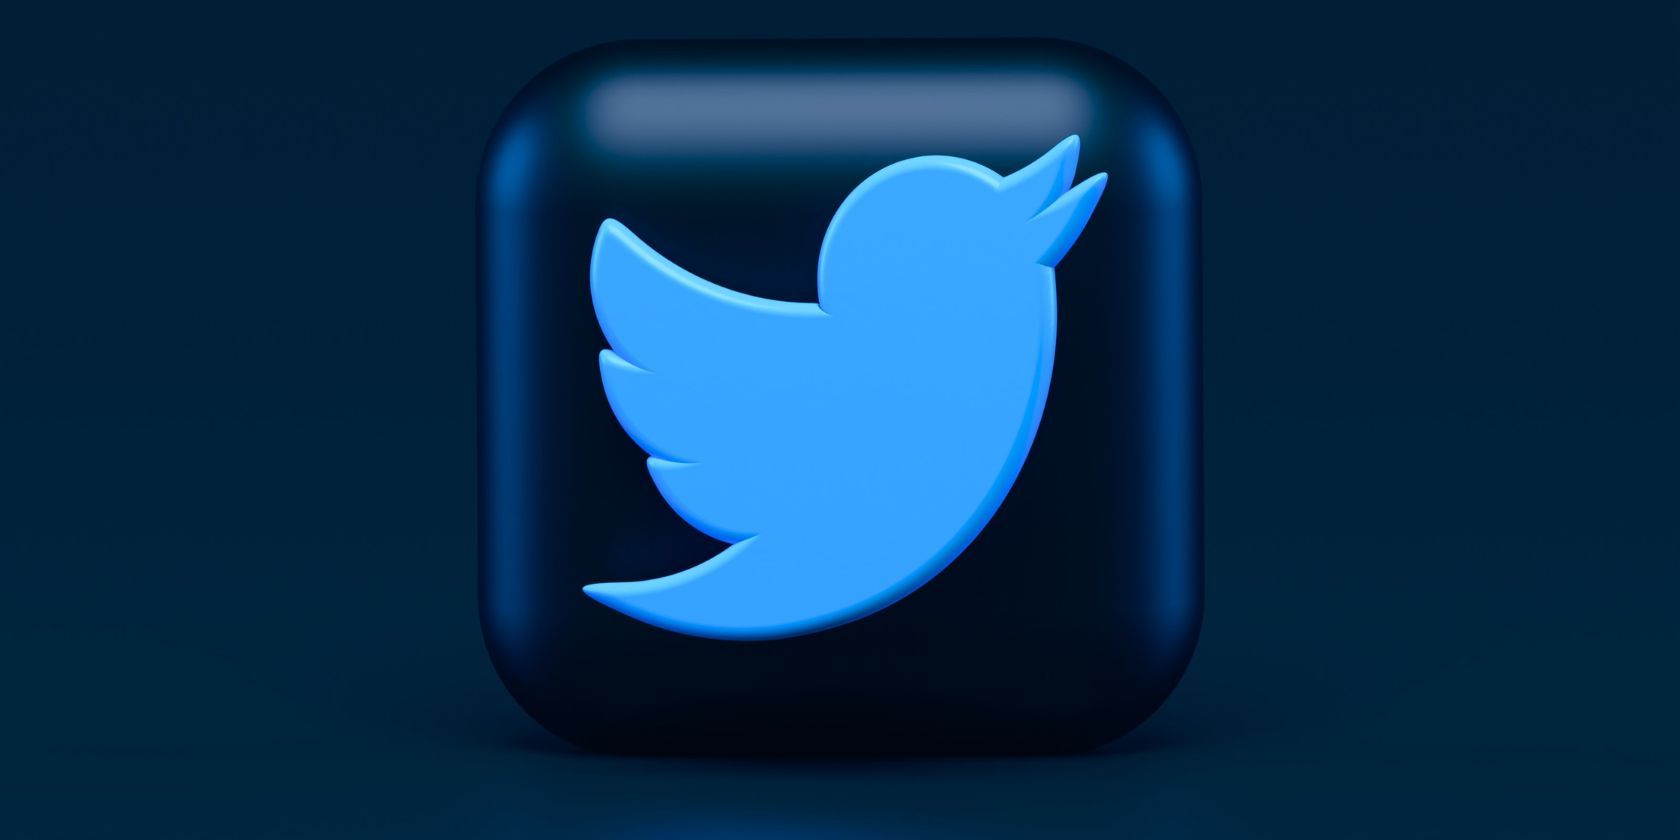 Twitter bird logo designed in 3D atop a plain navy background